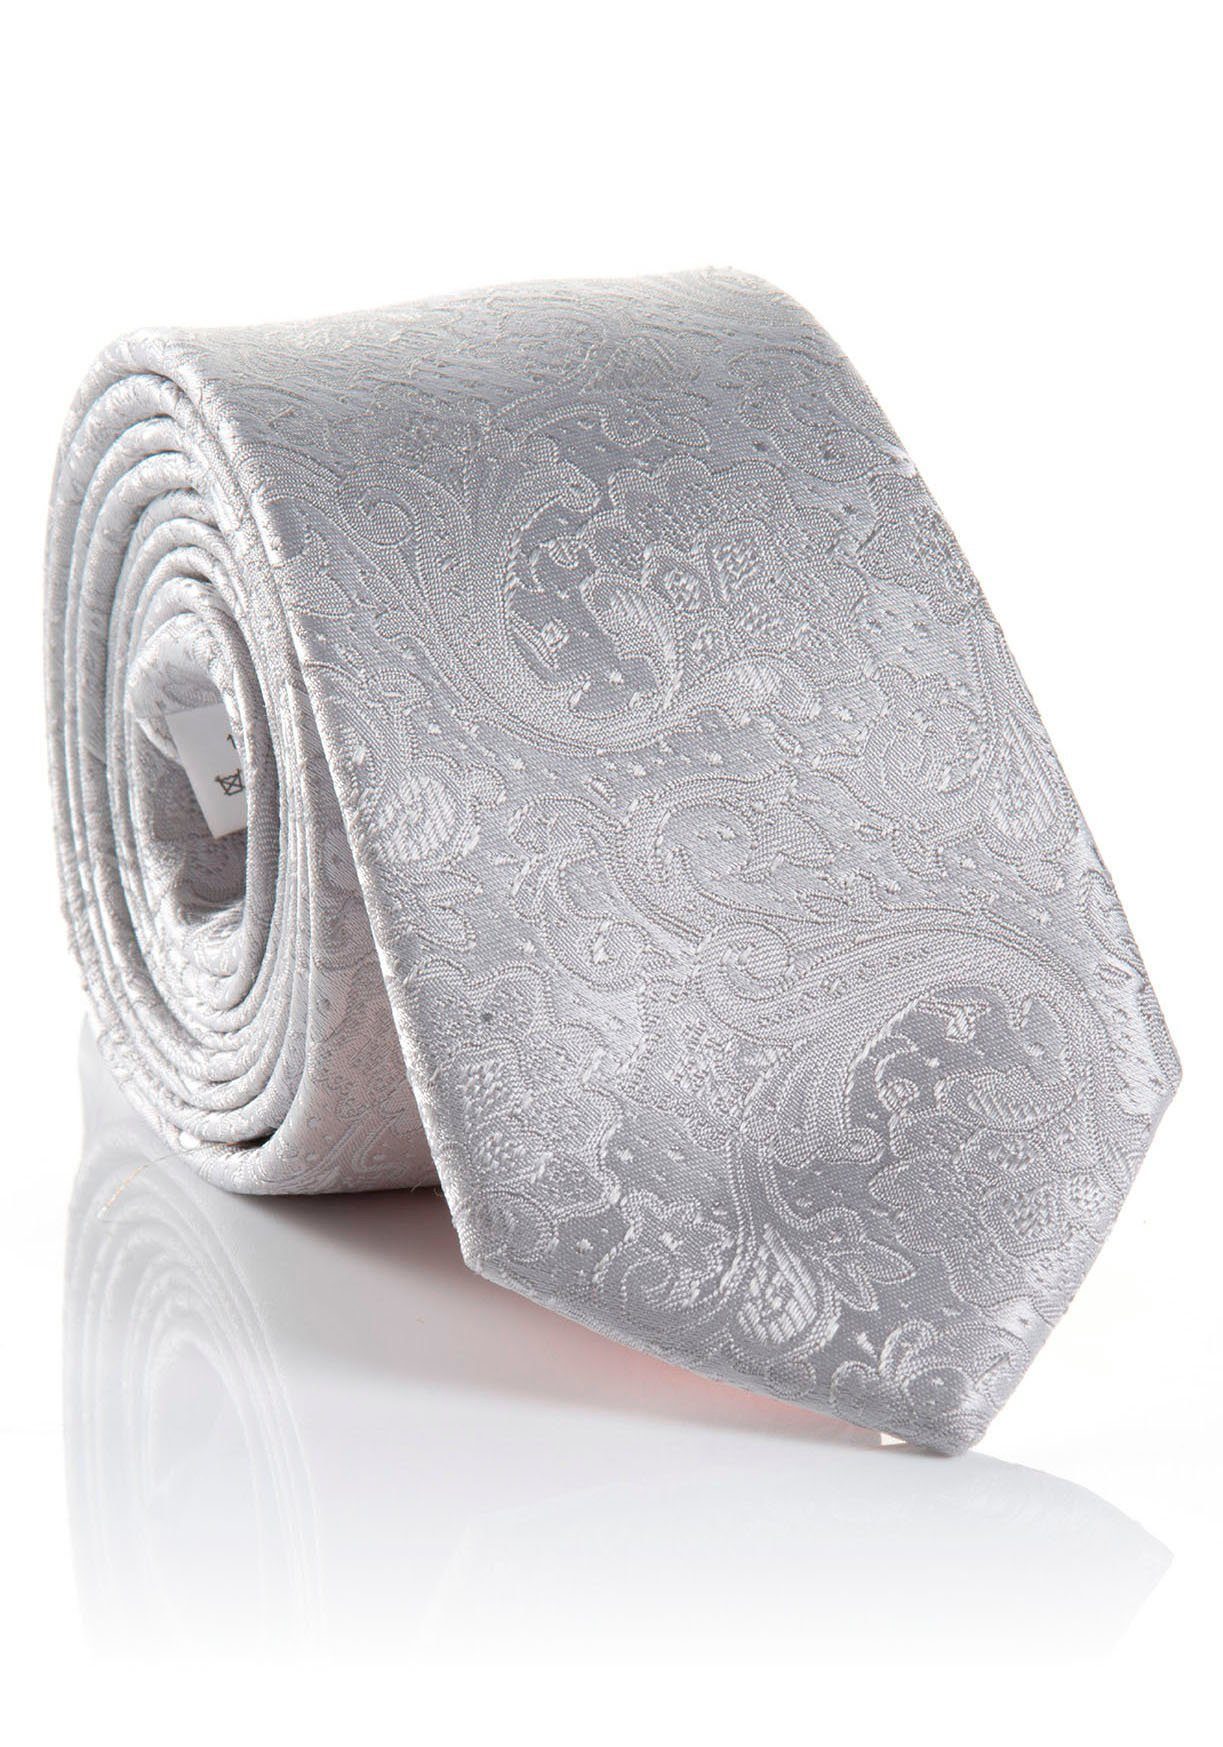 MONTI Krawatte LELIO Krawatte aus reiner Seide, Paisley-Muster silver